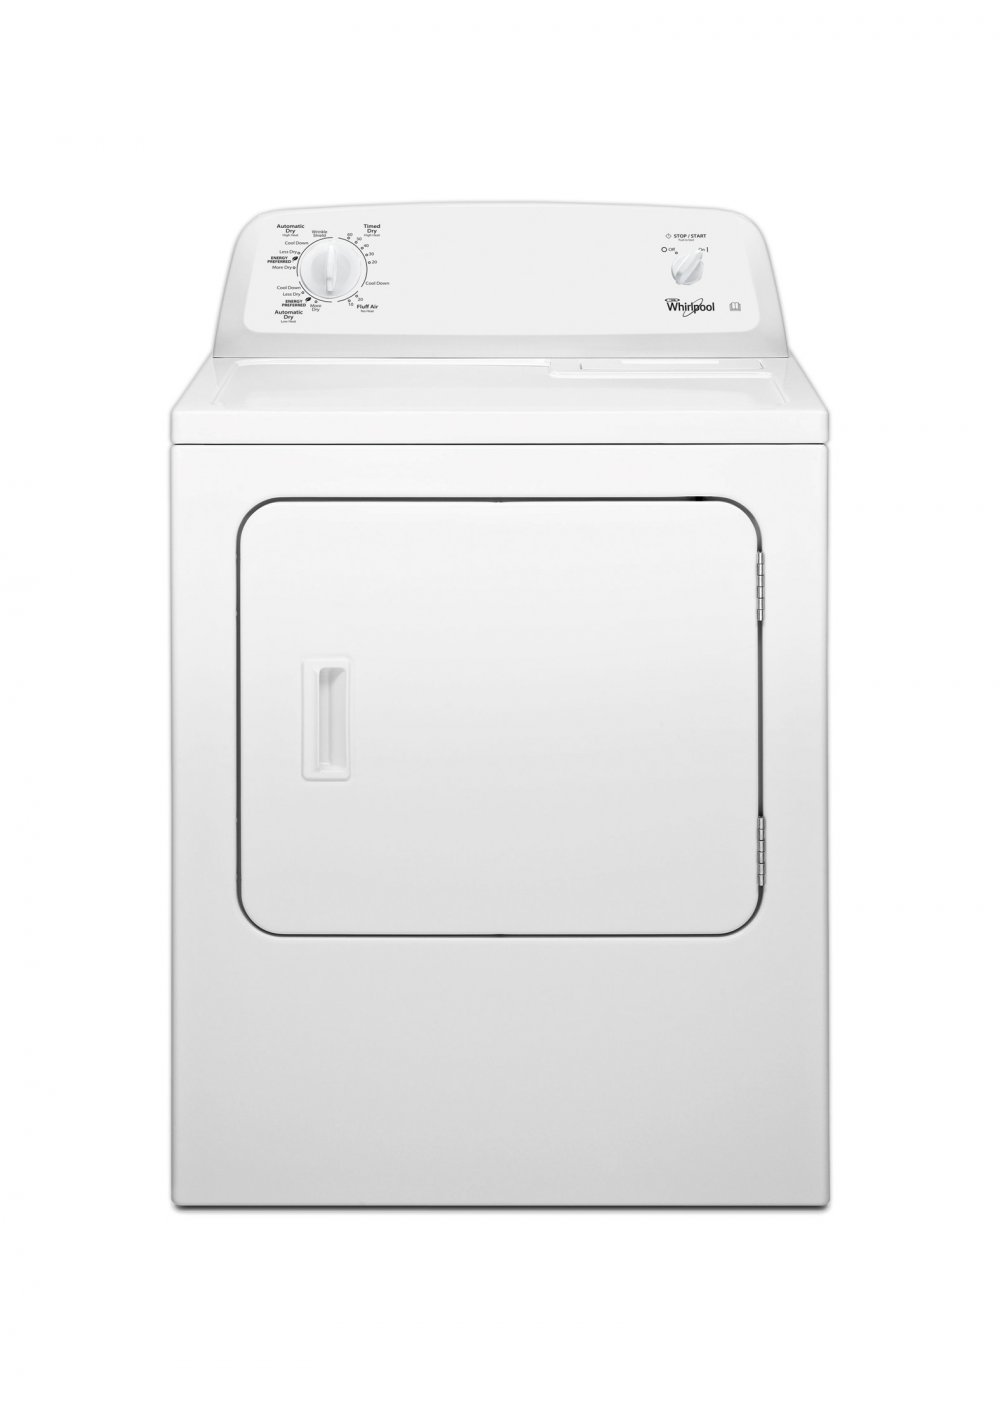 Dryer 7K,12P, 2Knb-CP/Wh